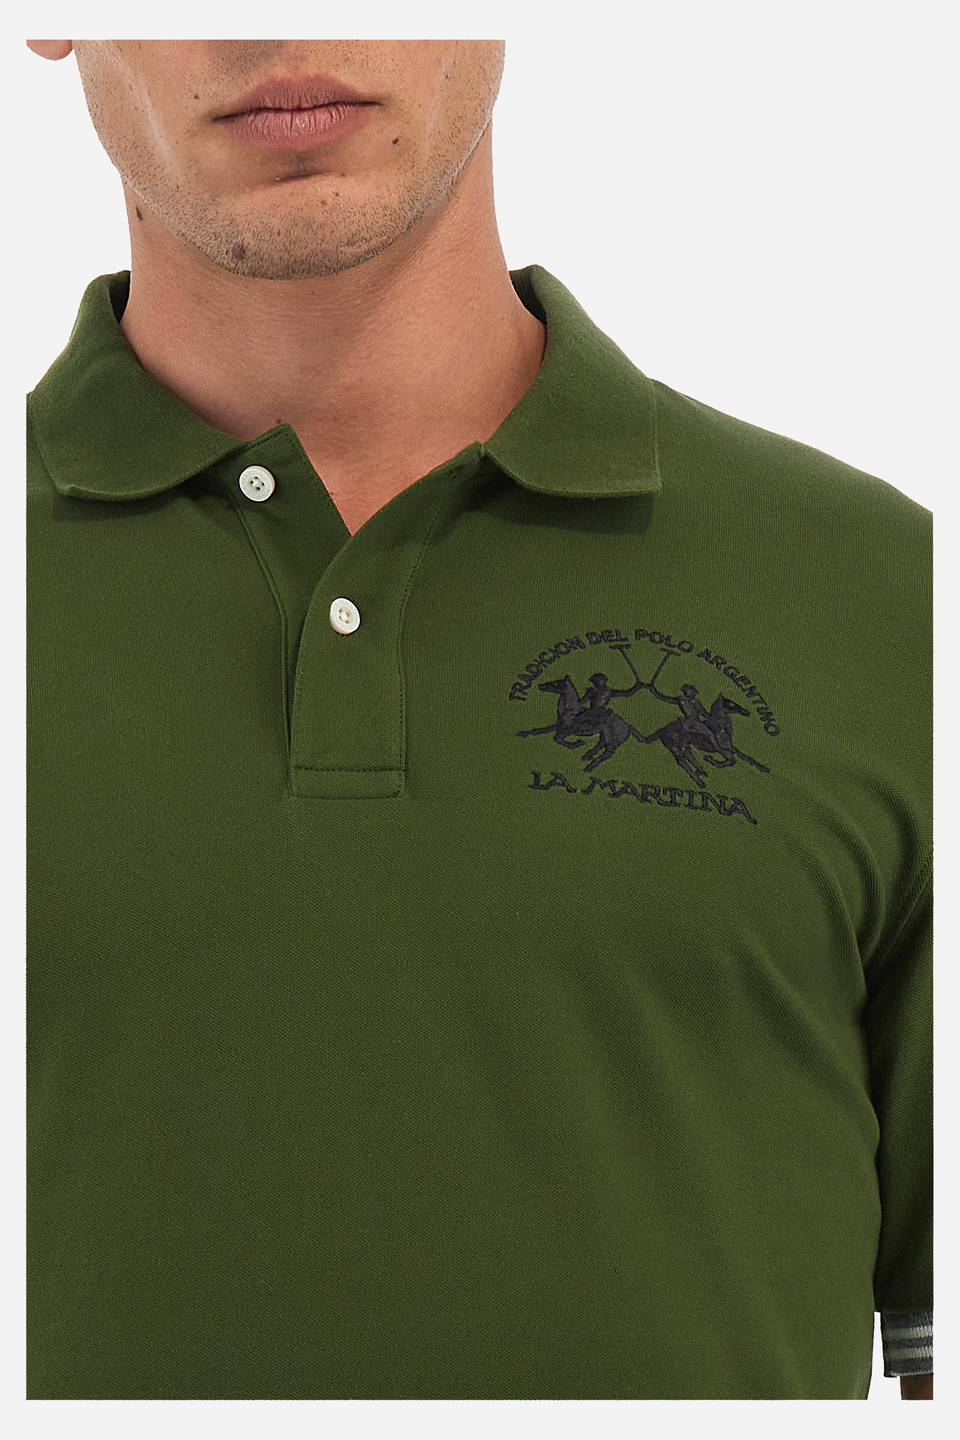 Men's polo shirt in a regular fit - Waddell | La Martina - Official Online Shop